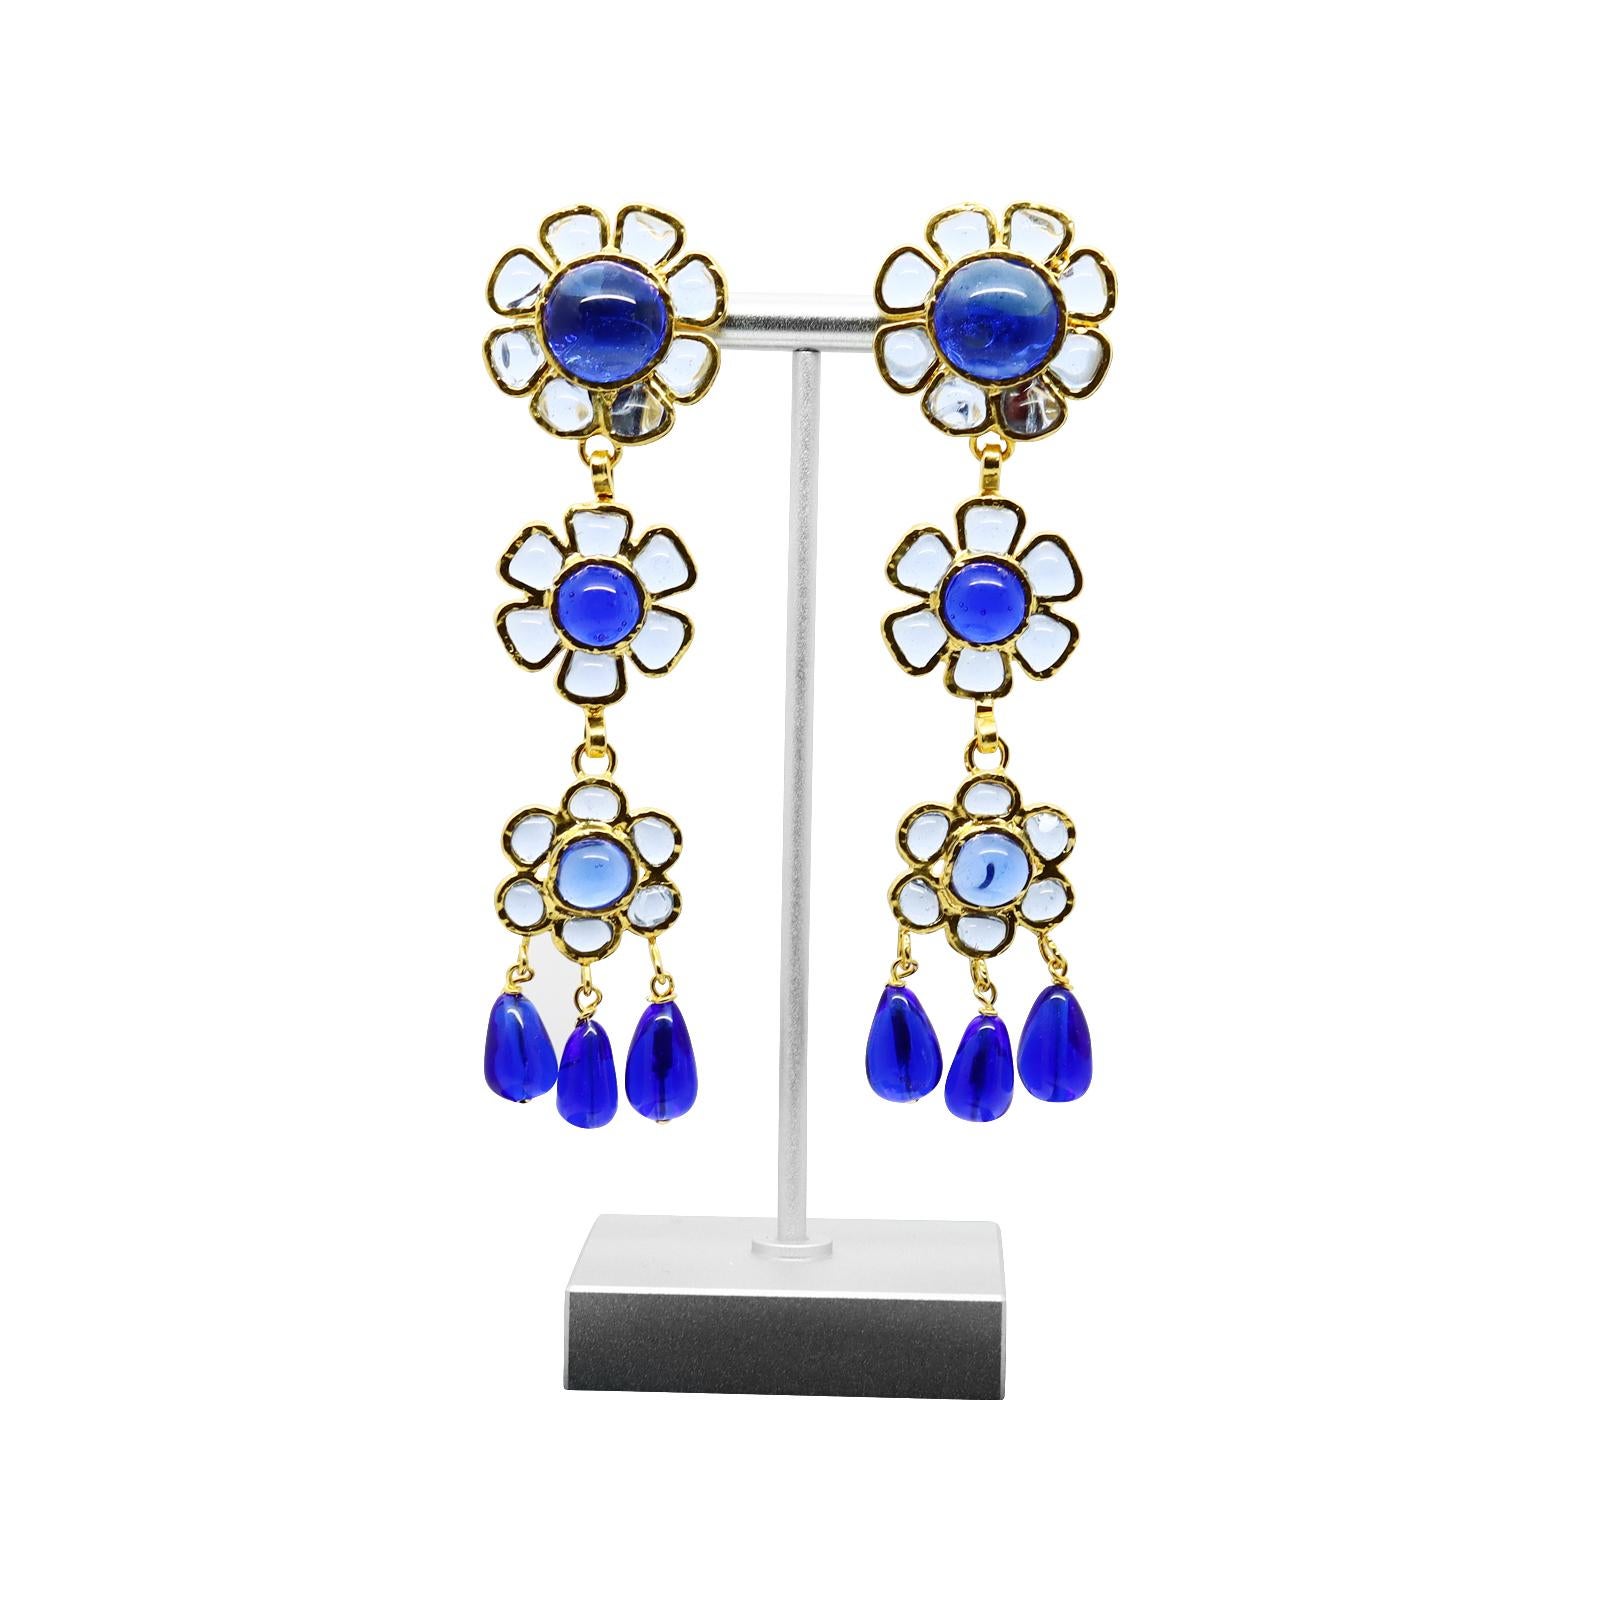 Maison Gripoix Vintage Blue and Light Blue Flower Dangling Earrings Circa 1980s For Sale 2